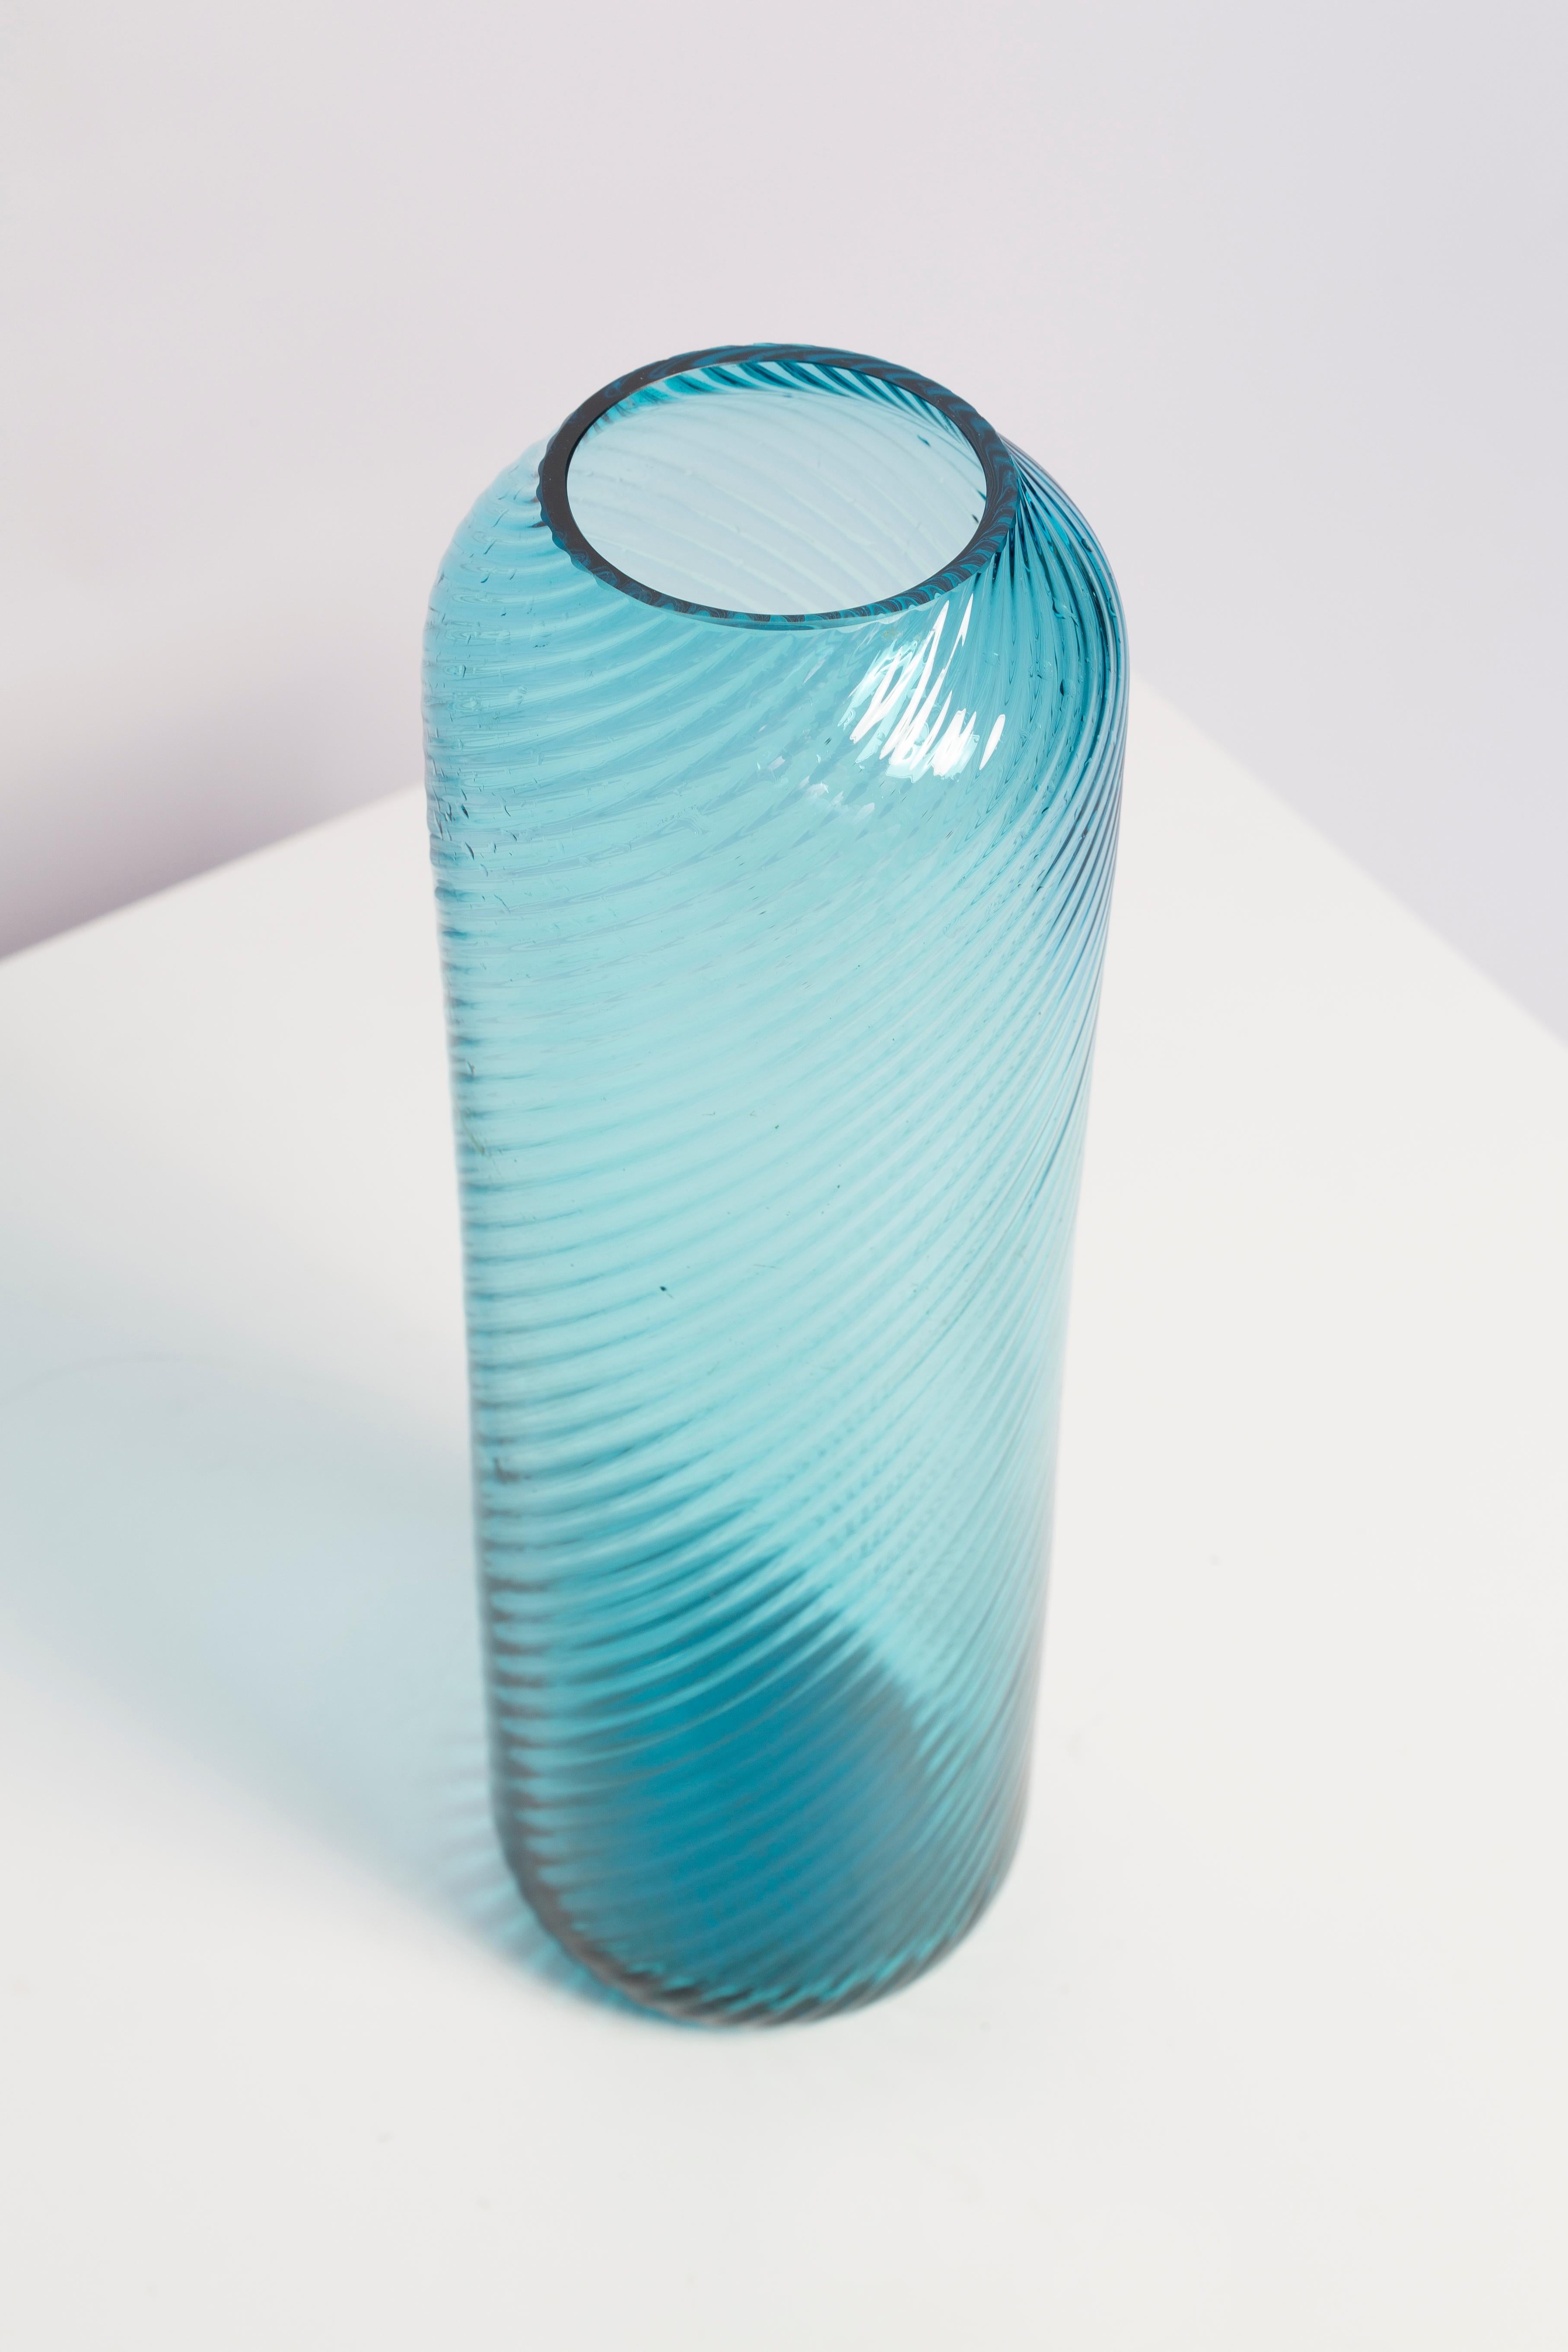 20th Century Mid Century Light Blue Vase, Italy, 1960s For Sale